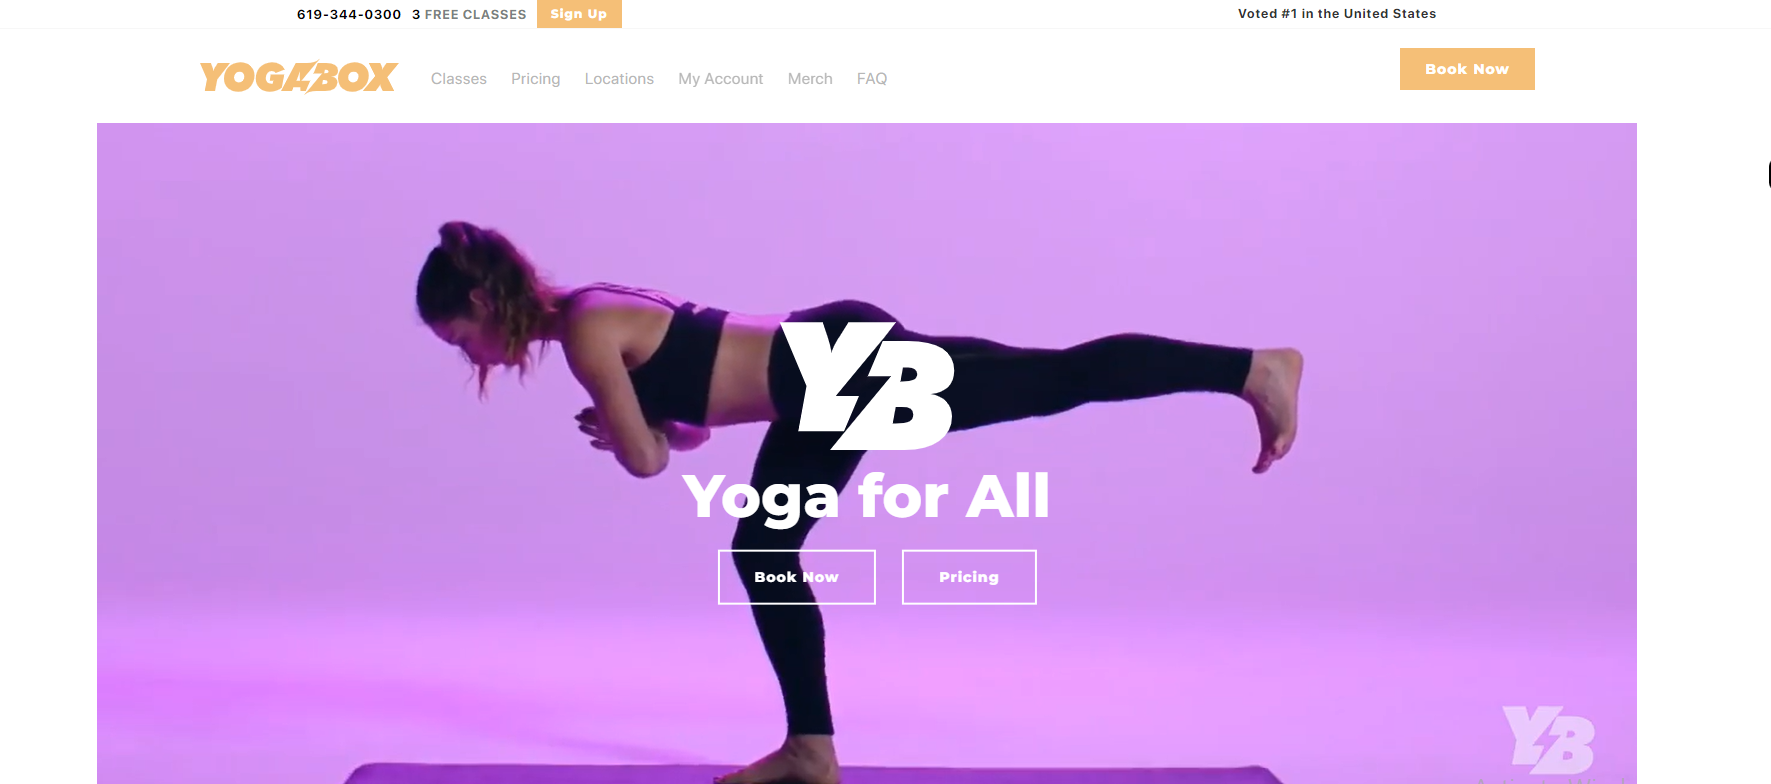 TheYogaBox.com upgrades its domain to YogaBox.com